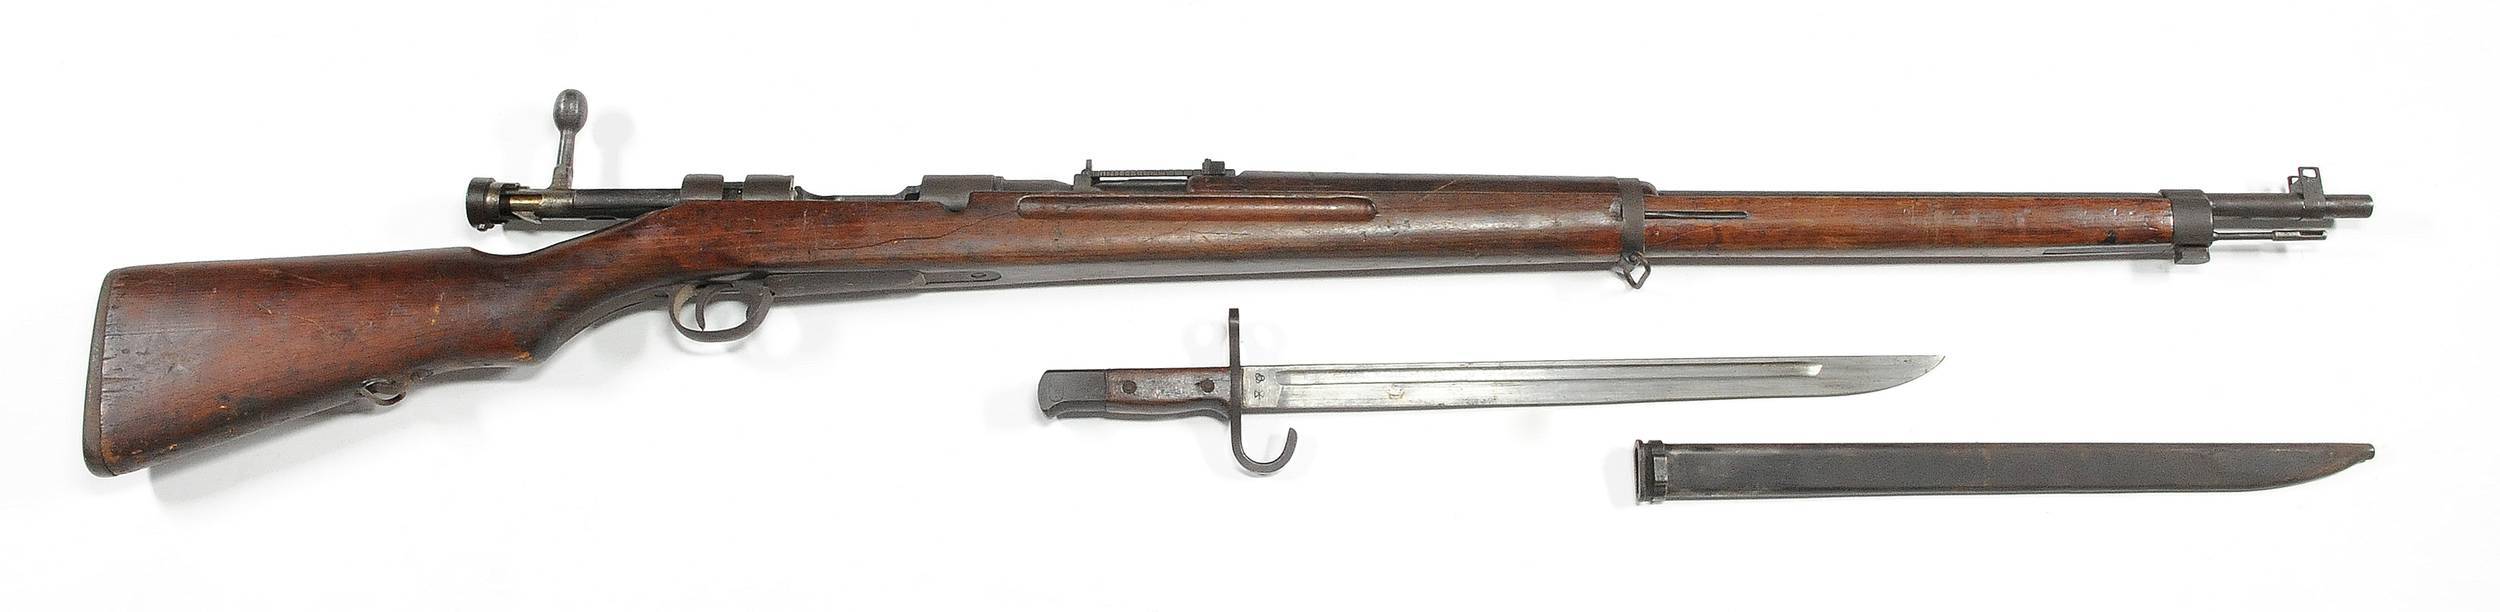 Cнайперская винтовка arisaka type 97